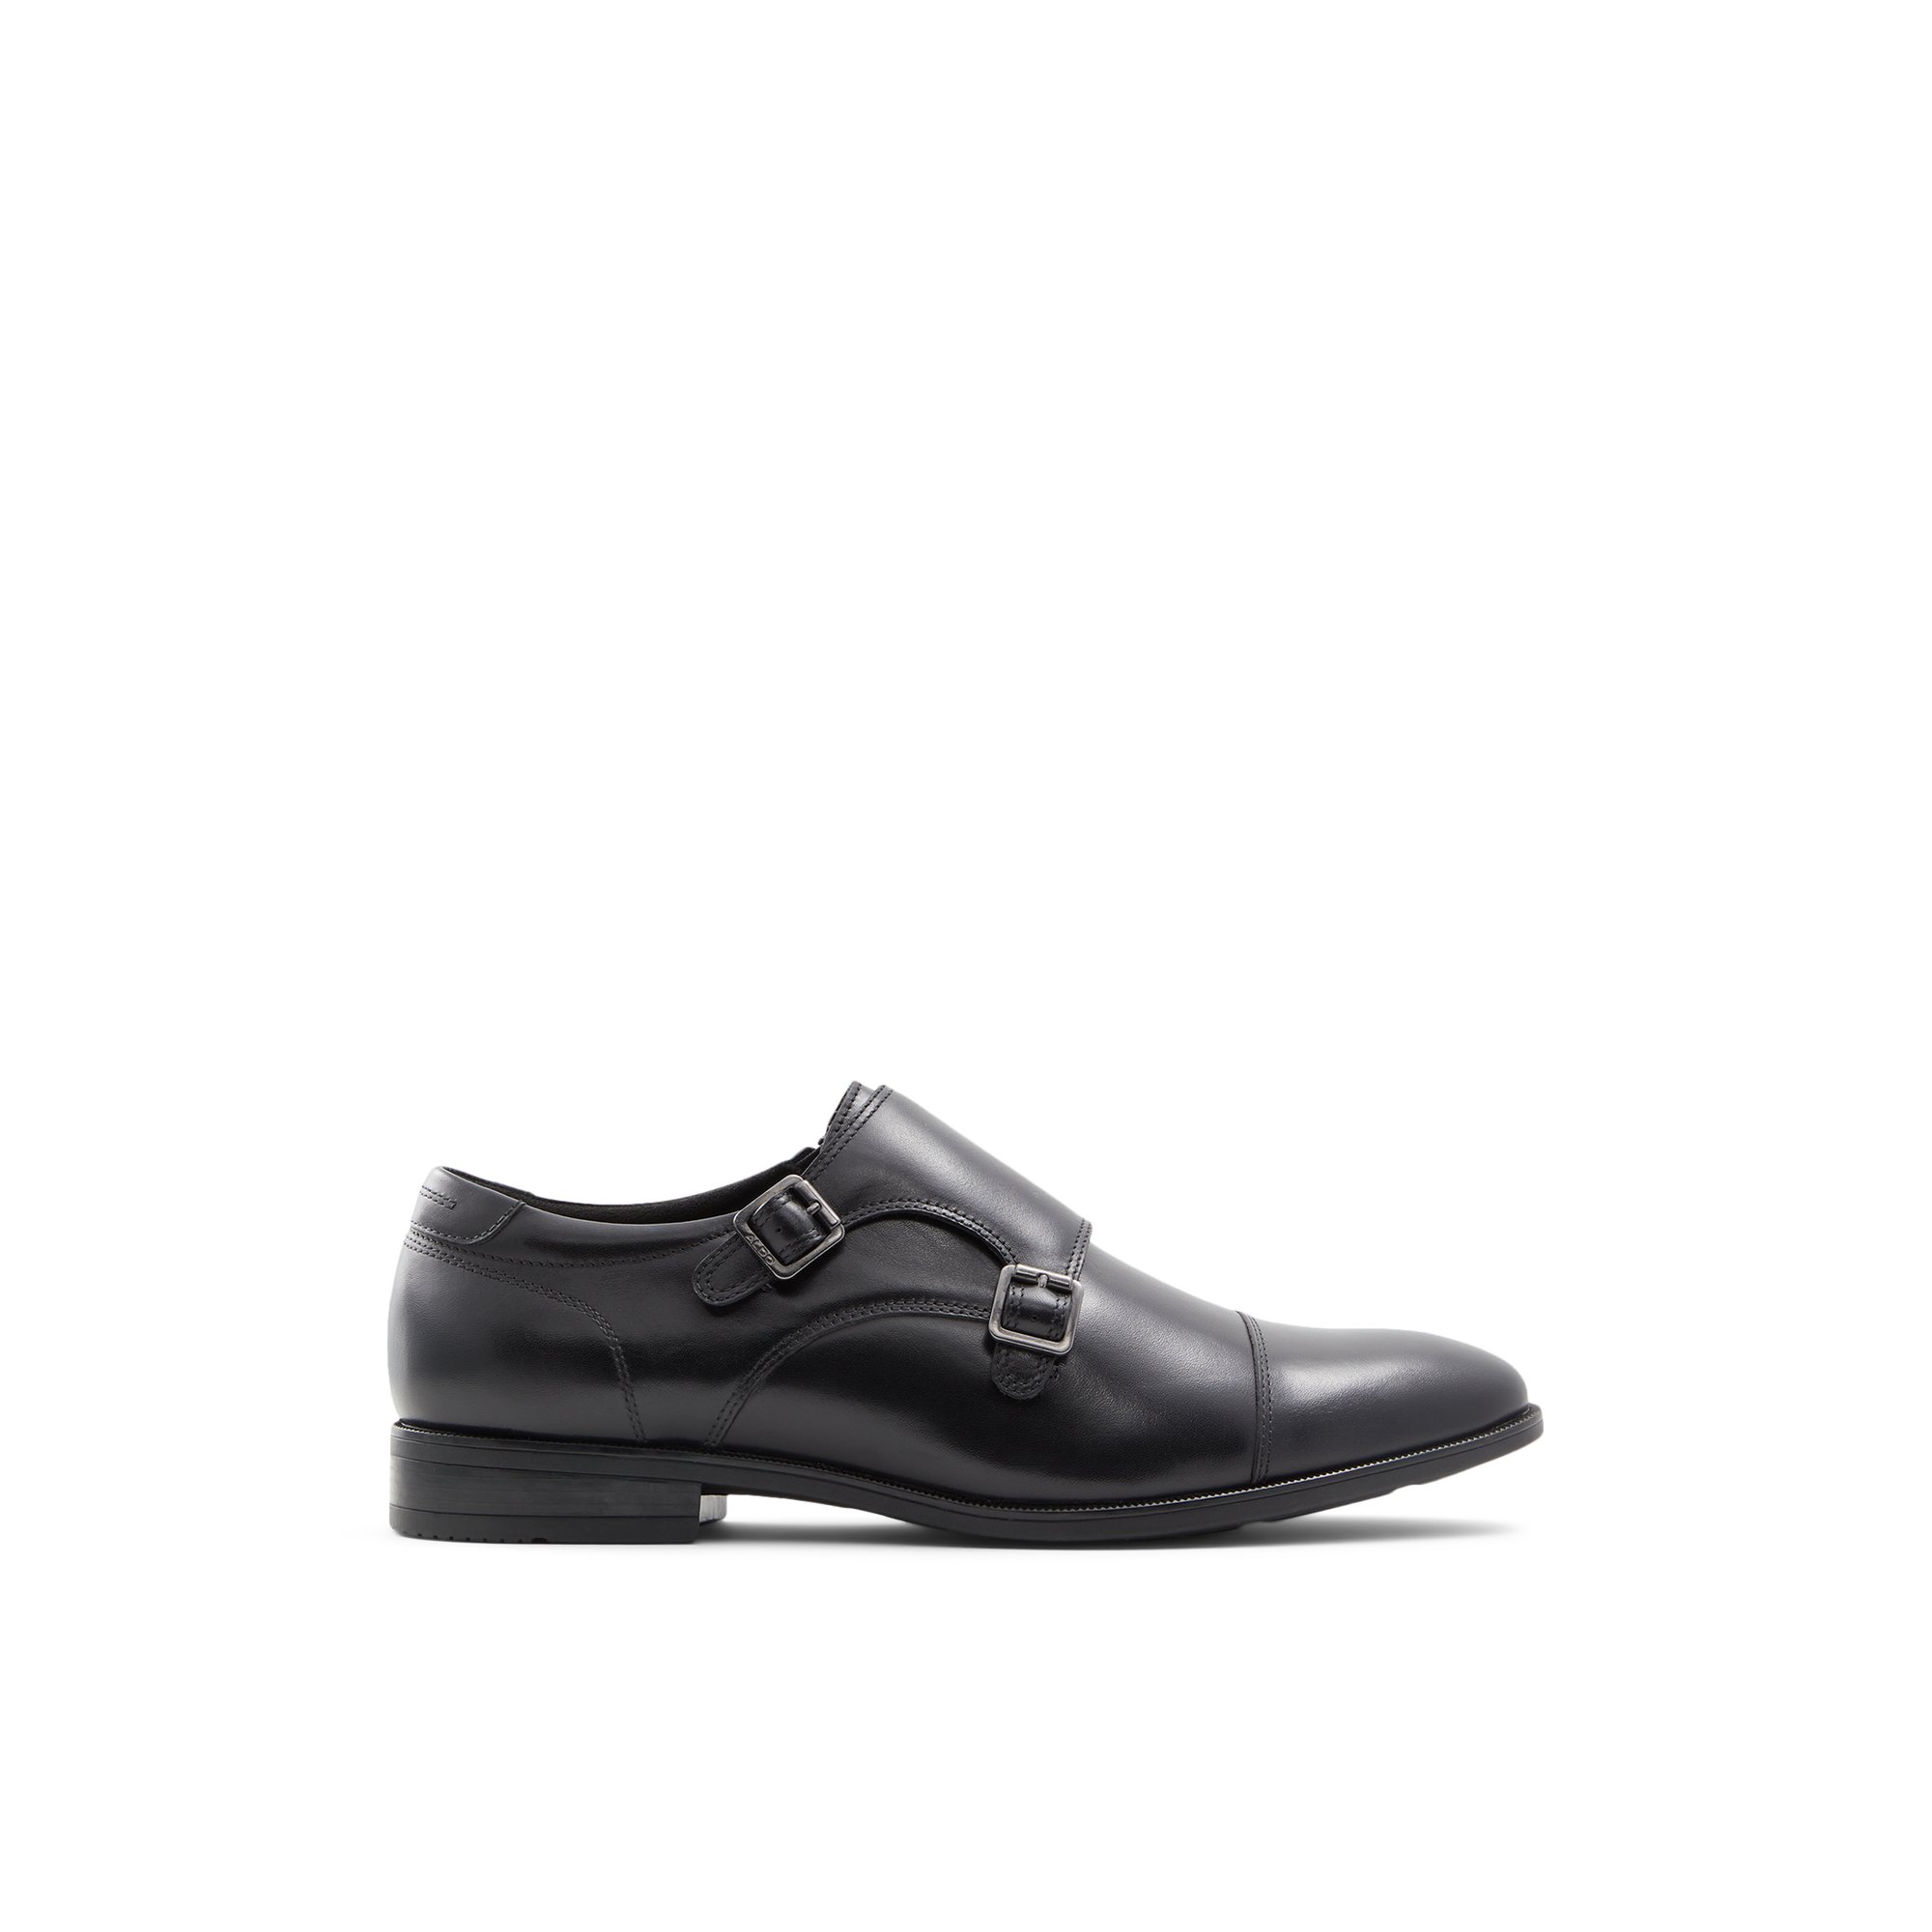 ALDO Holtlanflex - Men's Dress Shoes - Black